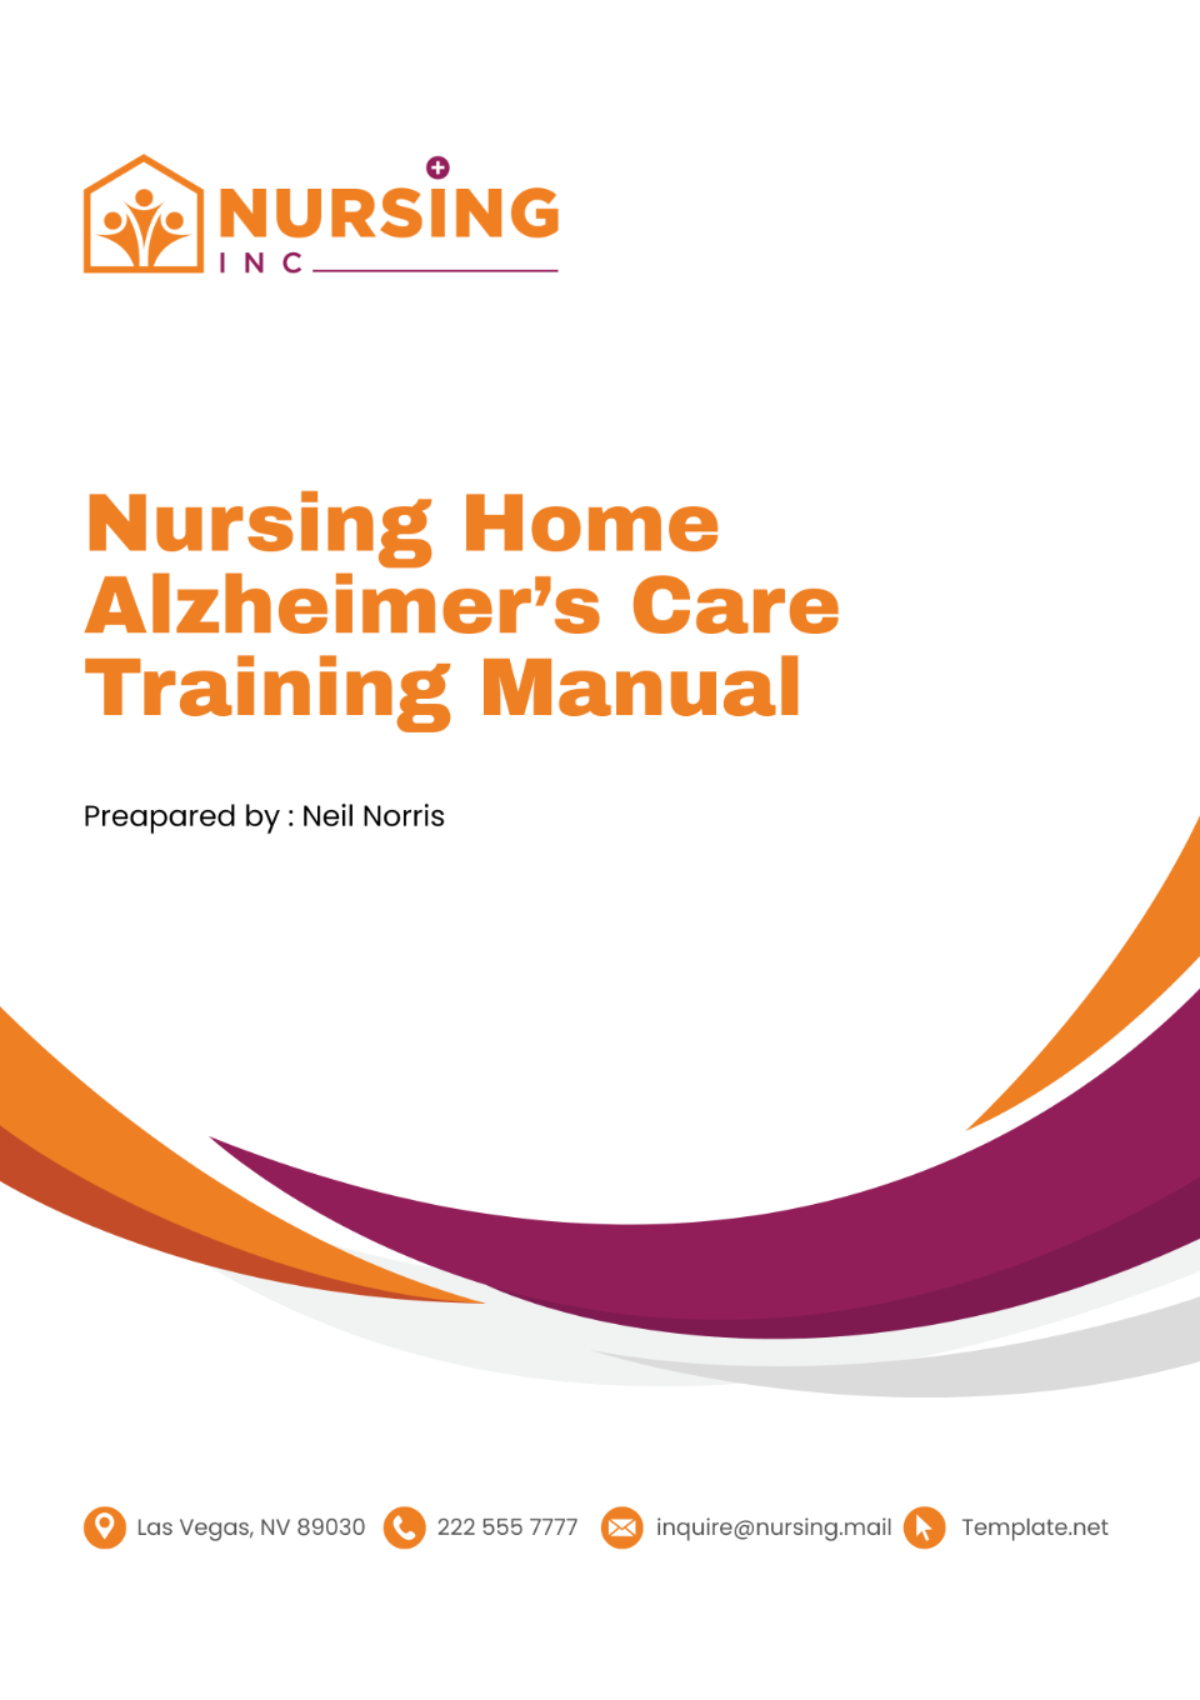 Free Nursing Home Alzheimer’s Care Training Manual Template